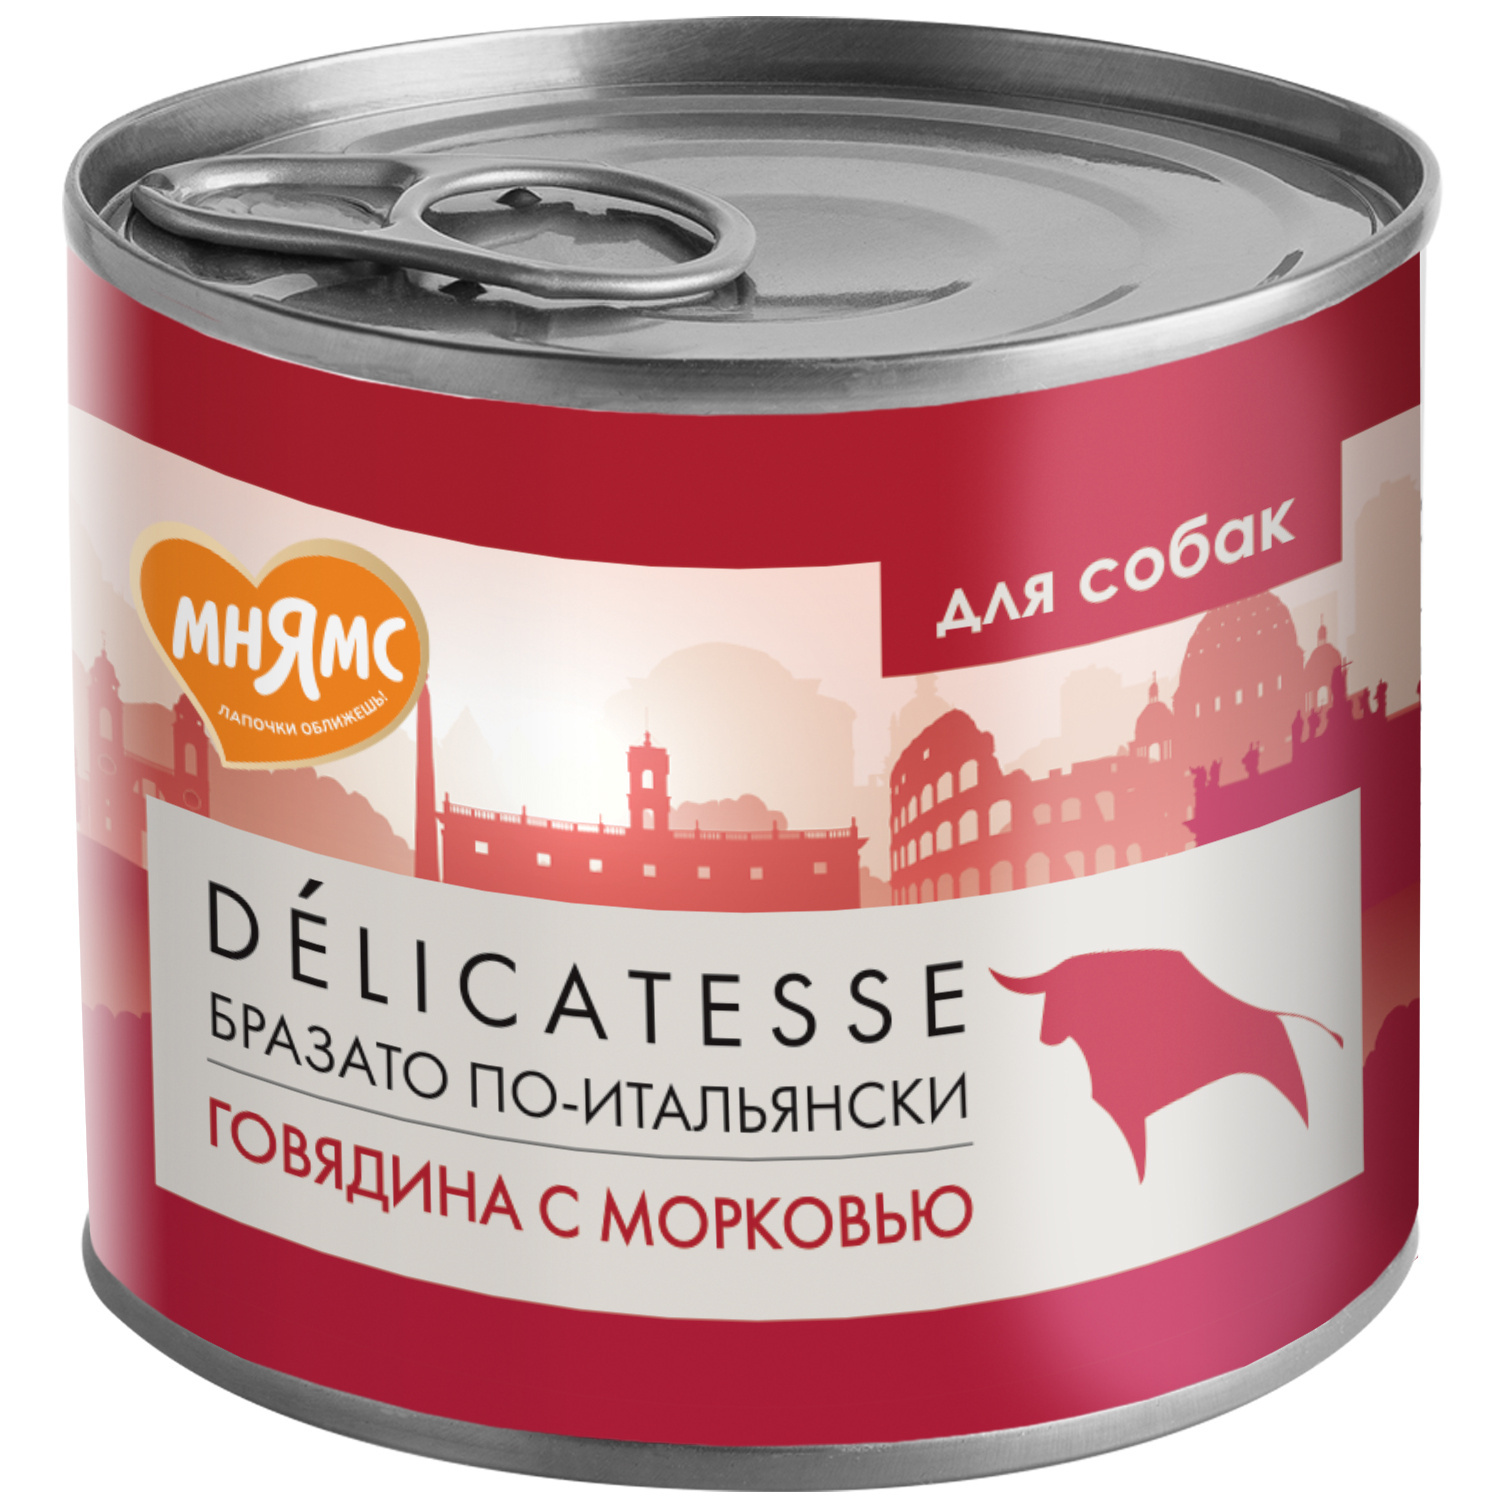 Мнямс Мнямс консервы Бразато по-итальянски для собак всех пород из говядины с морковью (200 г) мнямс мнямс консервы фрикасе по парижски для собак всех пород из индейки с травами 200 г